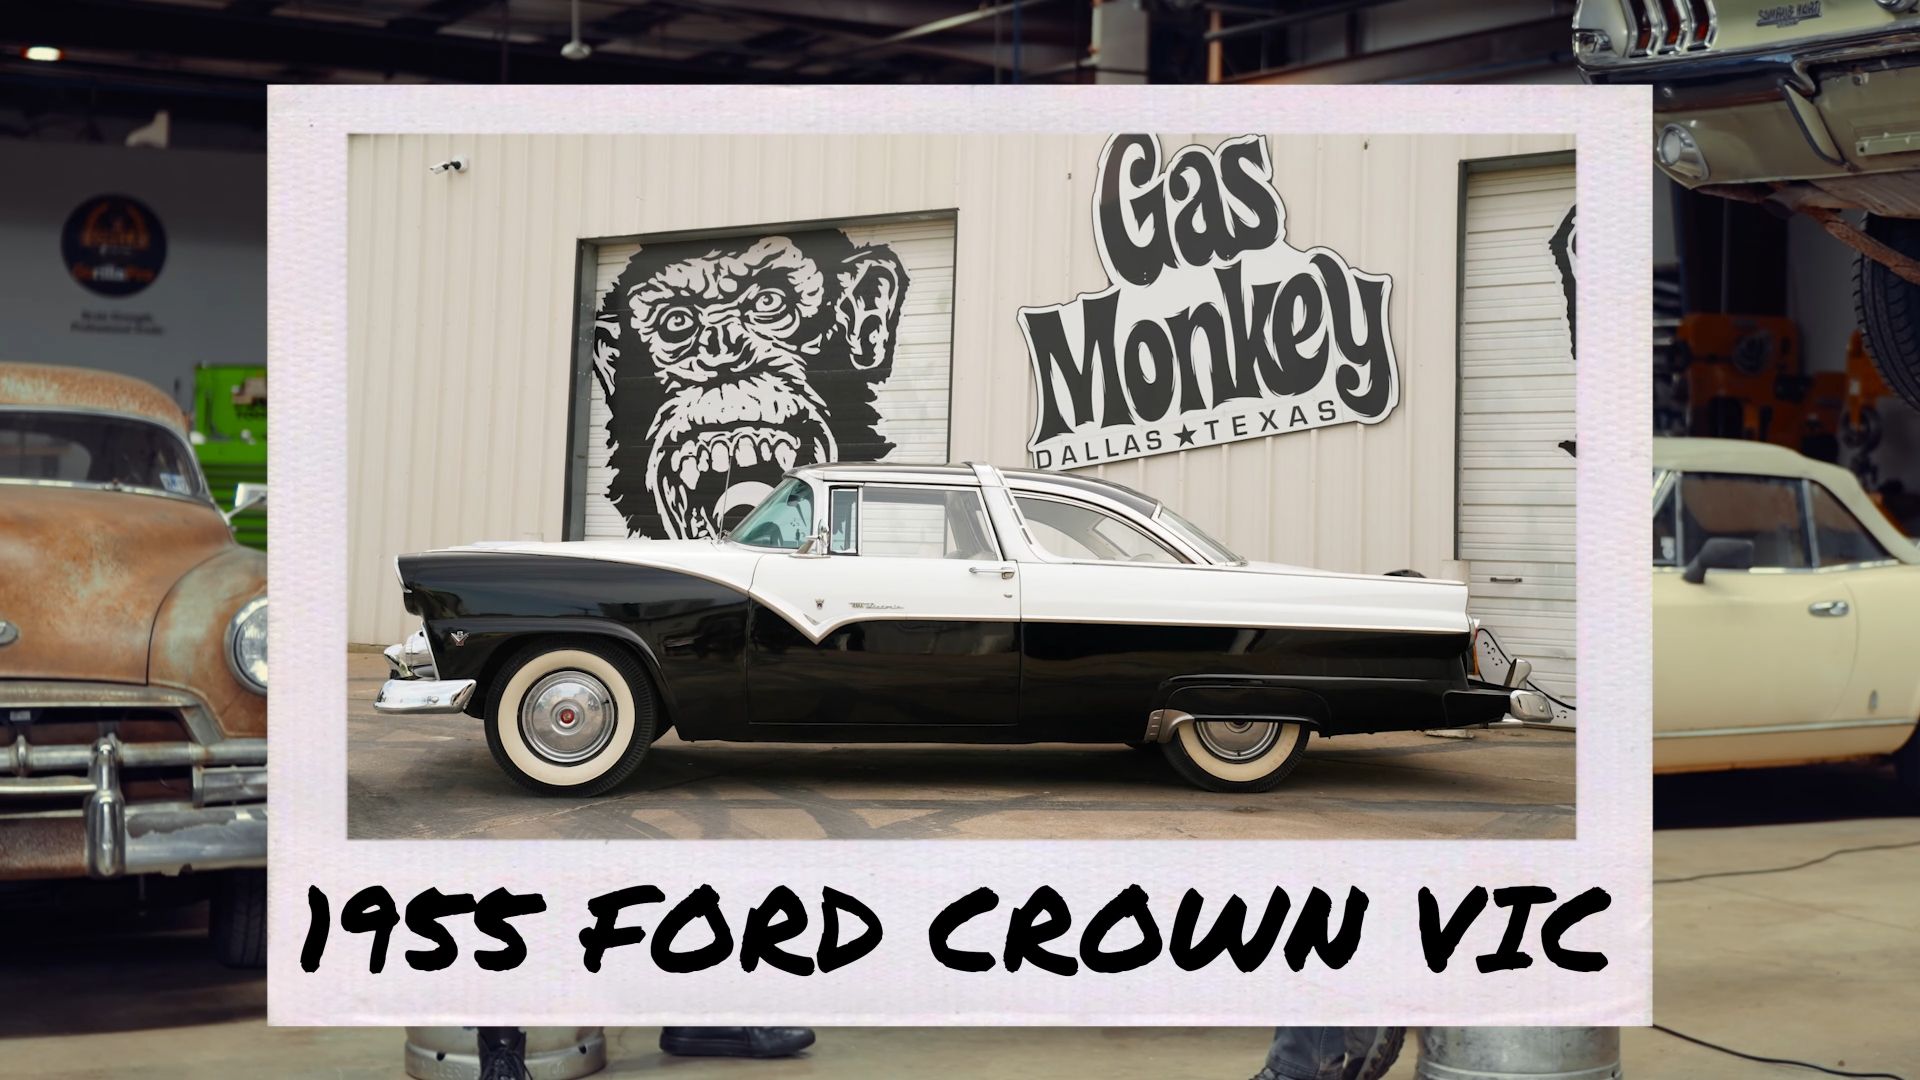 Gas Monkey Garage 1955 Ford Crown Vic vue latérale